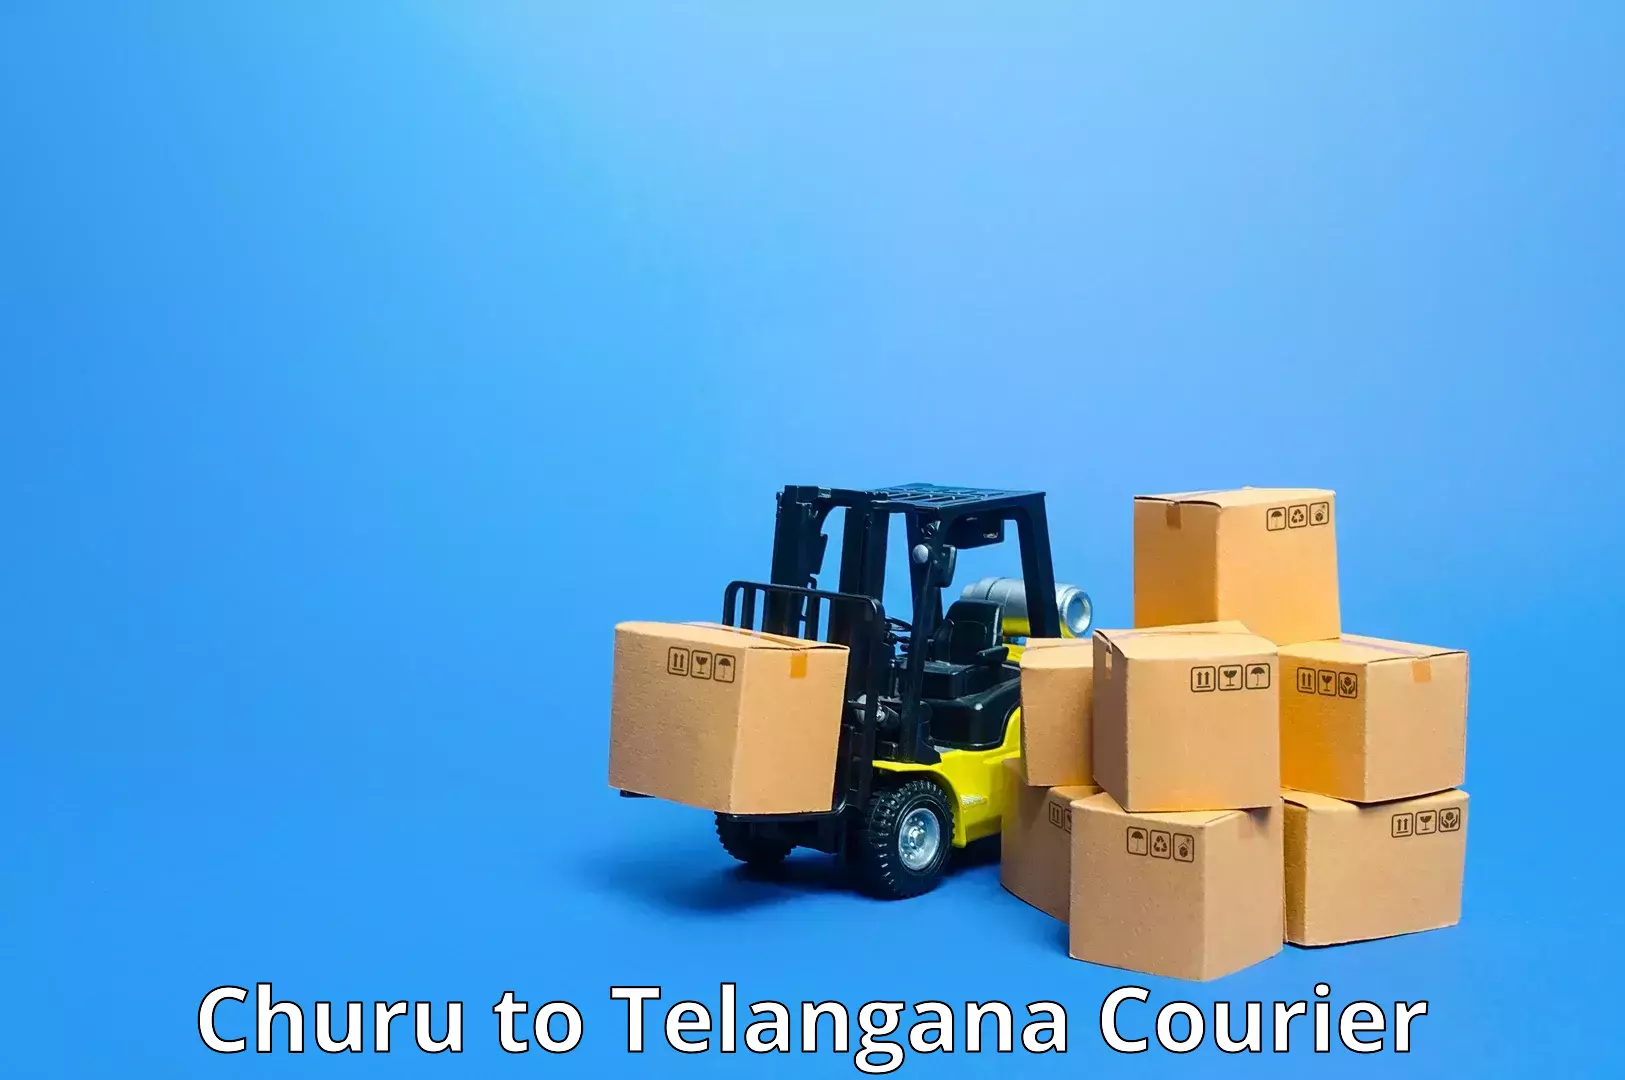 Package delivery network Churu to Nalgonda